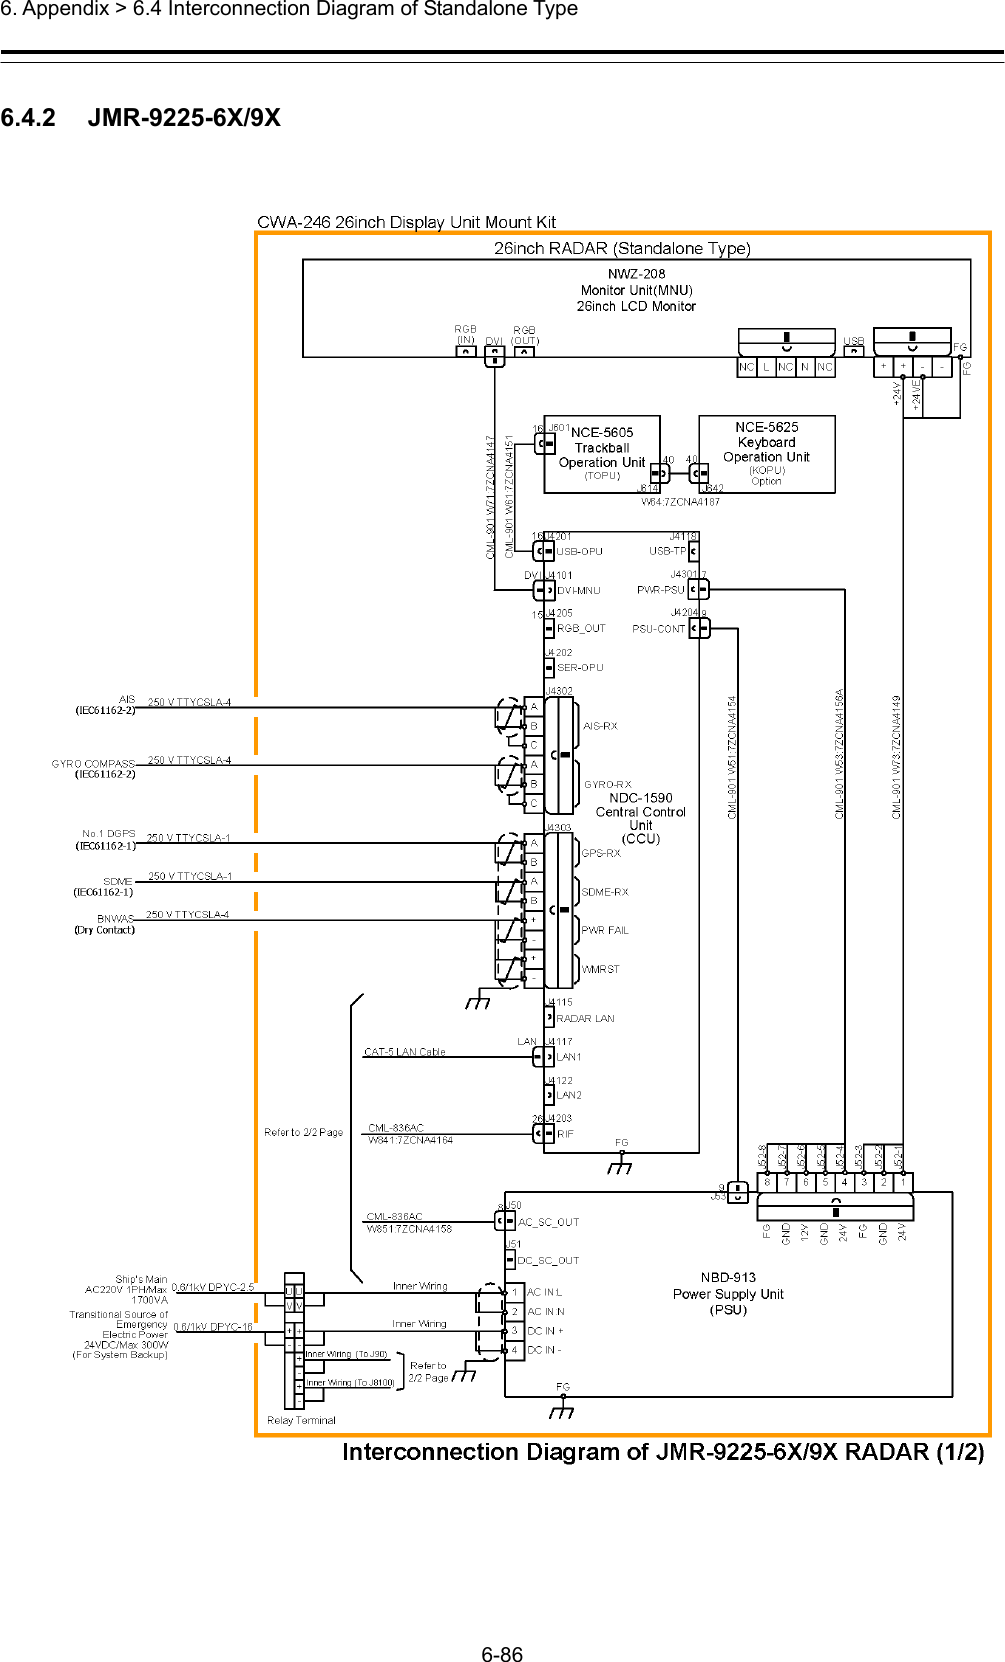  6. Appendix &gt; 6.4 Interconnection Diagram of Standalone Type 6-86  6.4.2   JMR-9225-6X/9X 